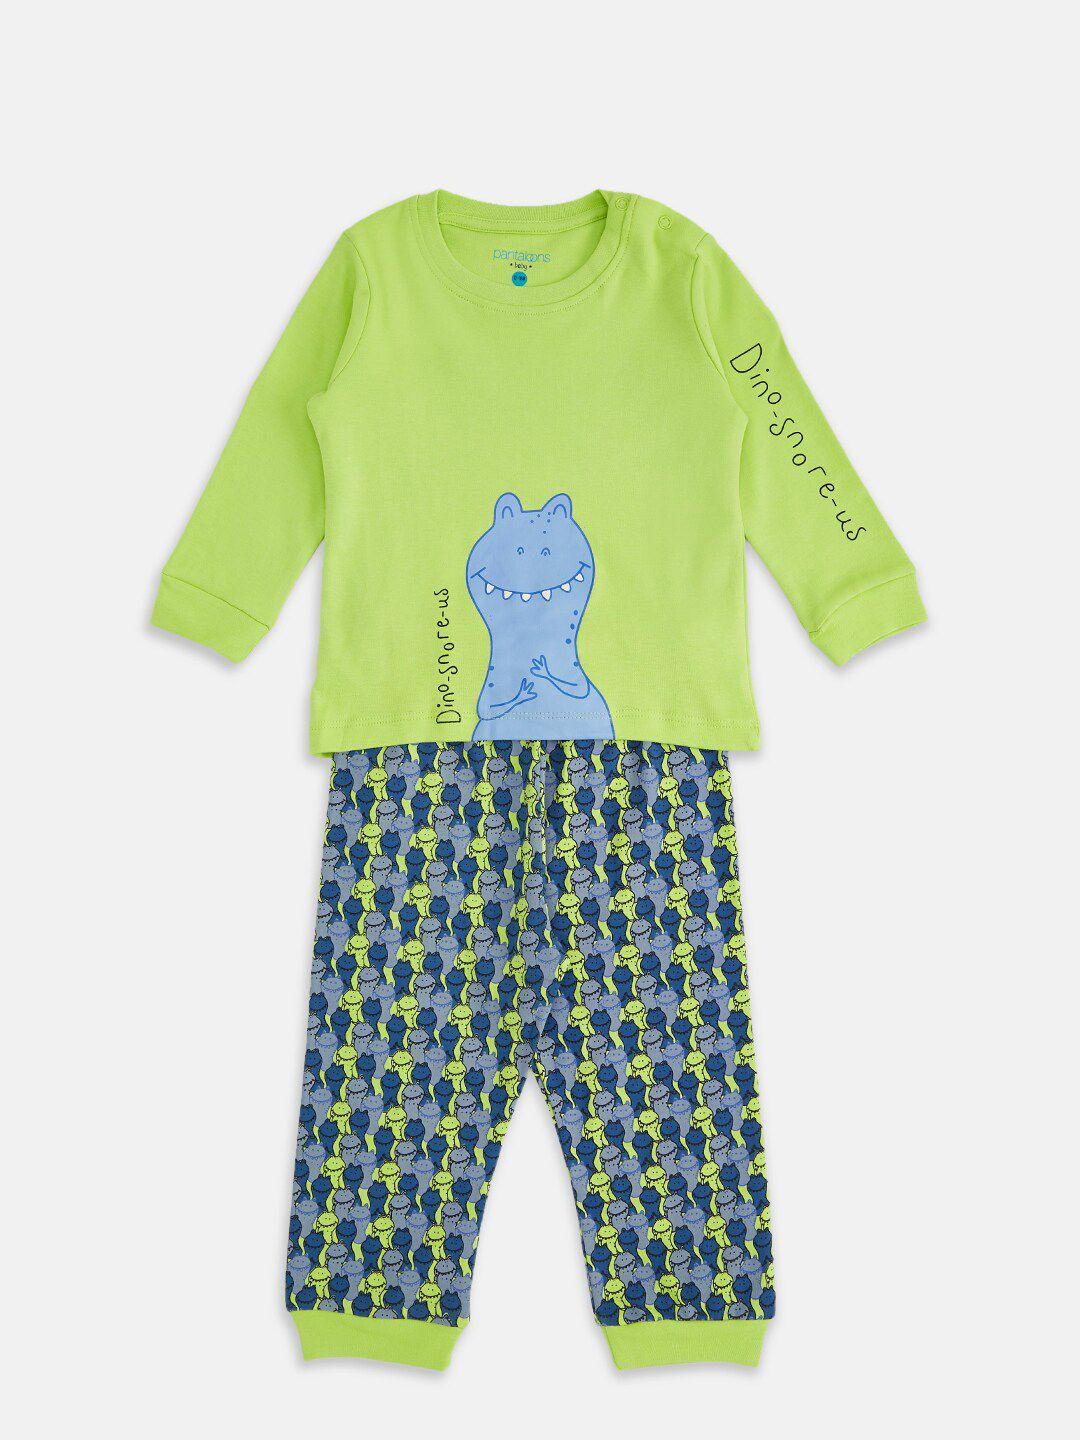 pantaloons baby boys green & blue printed t-shirt with pyjamas